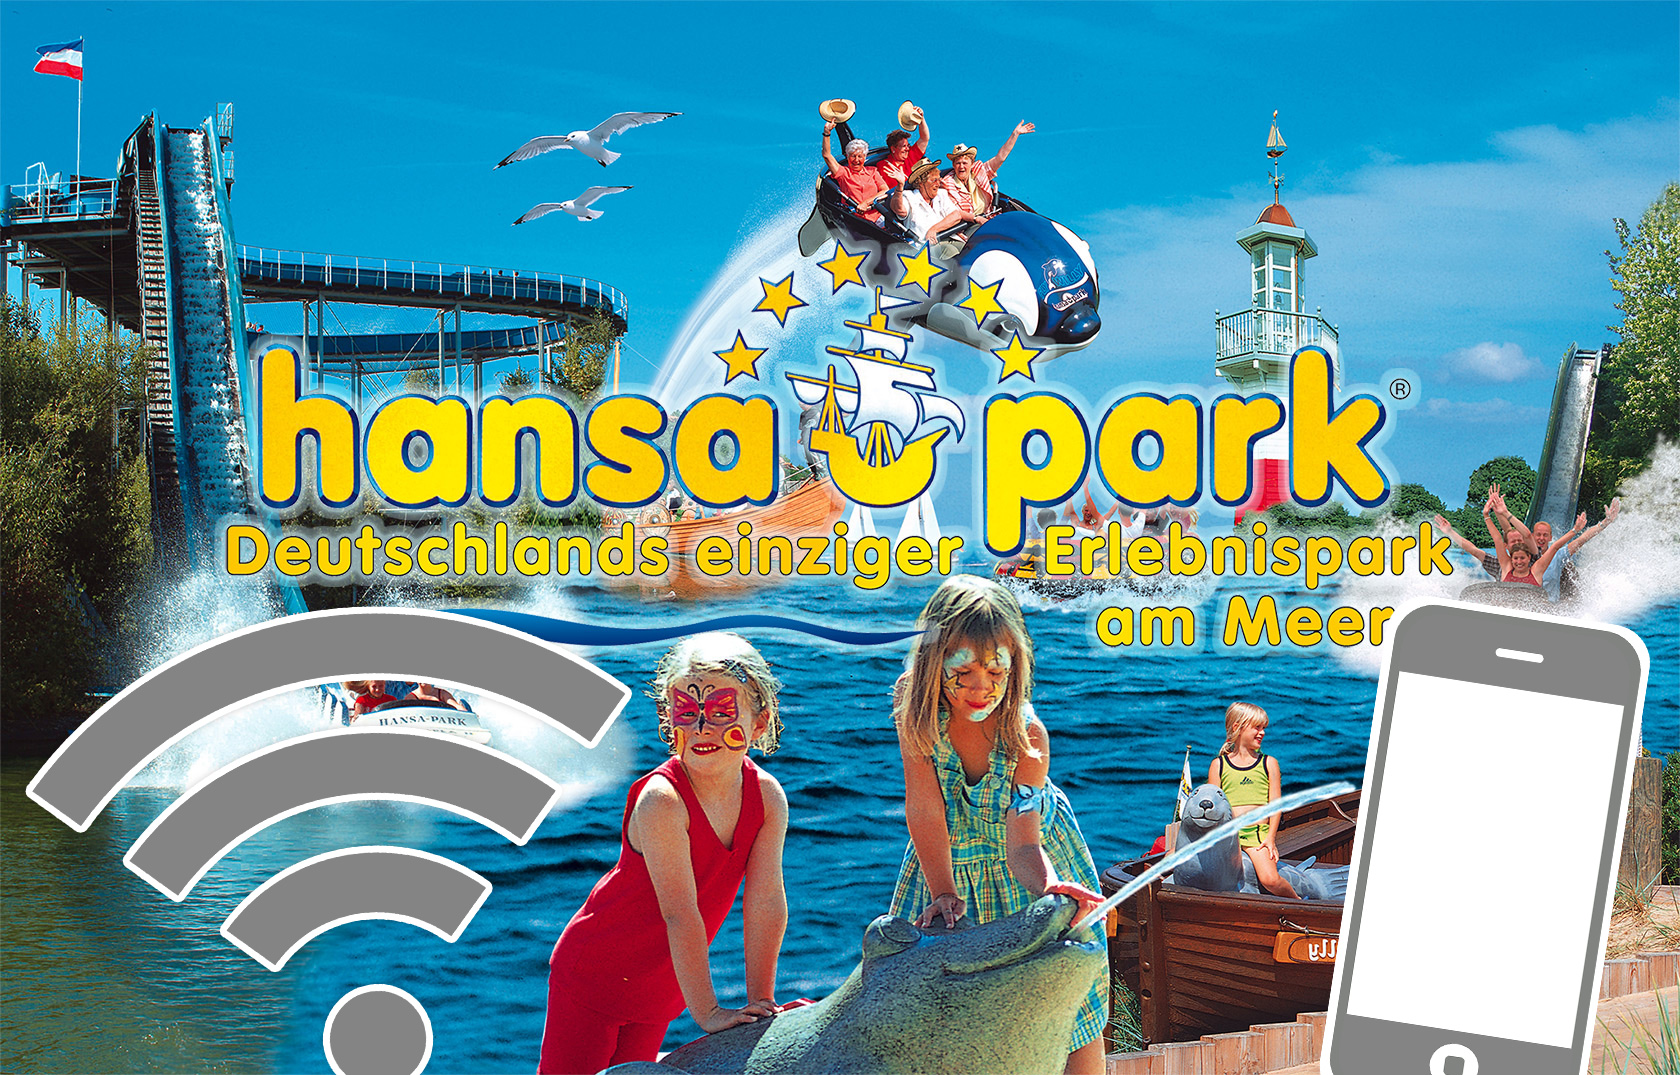 Hansa-Park kostenloses Wlan